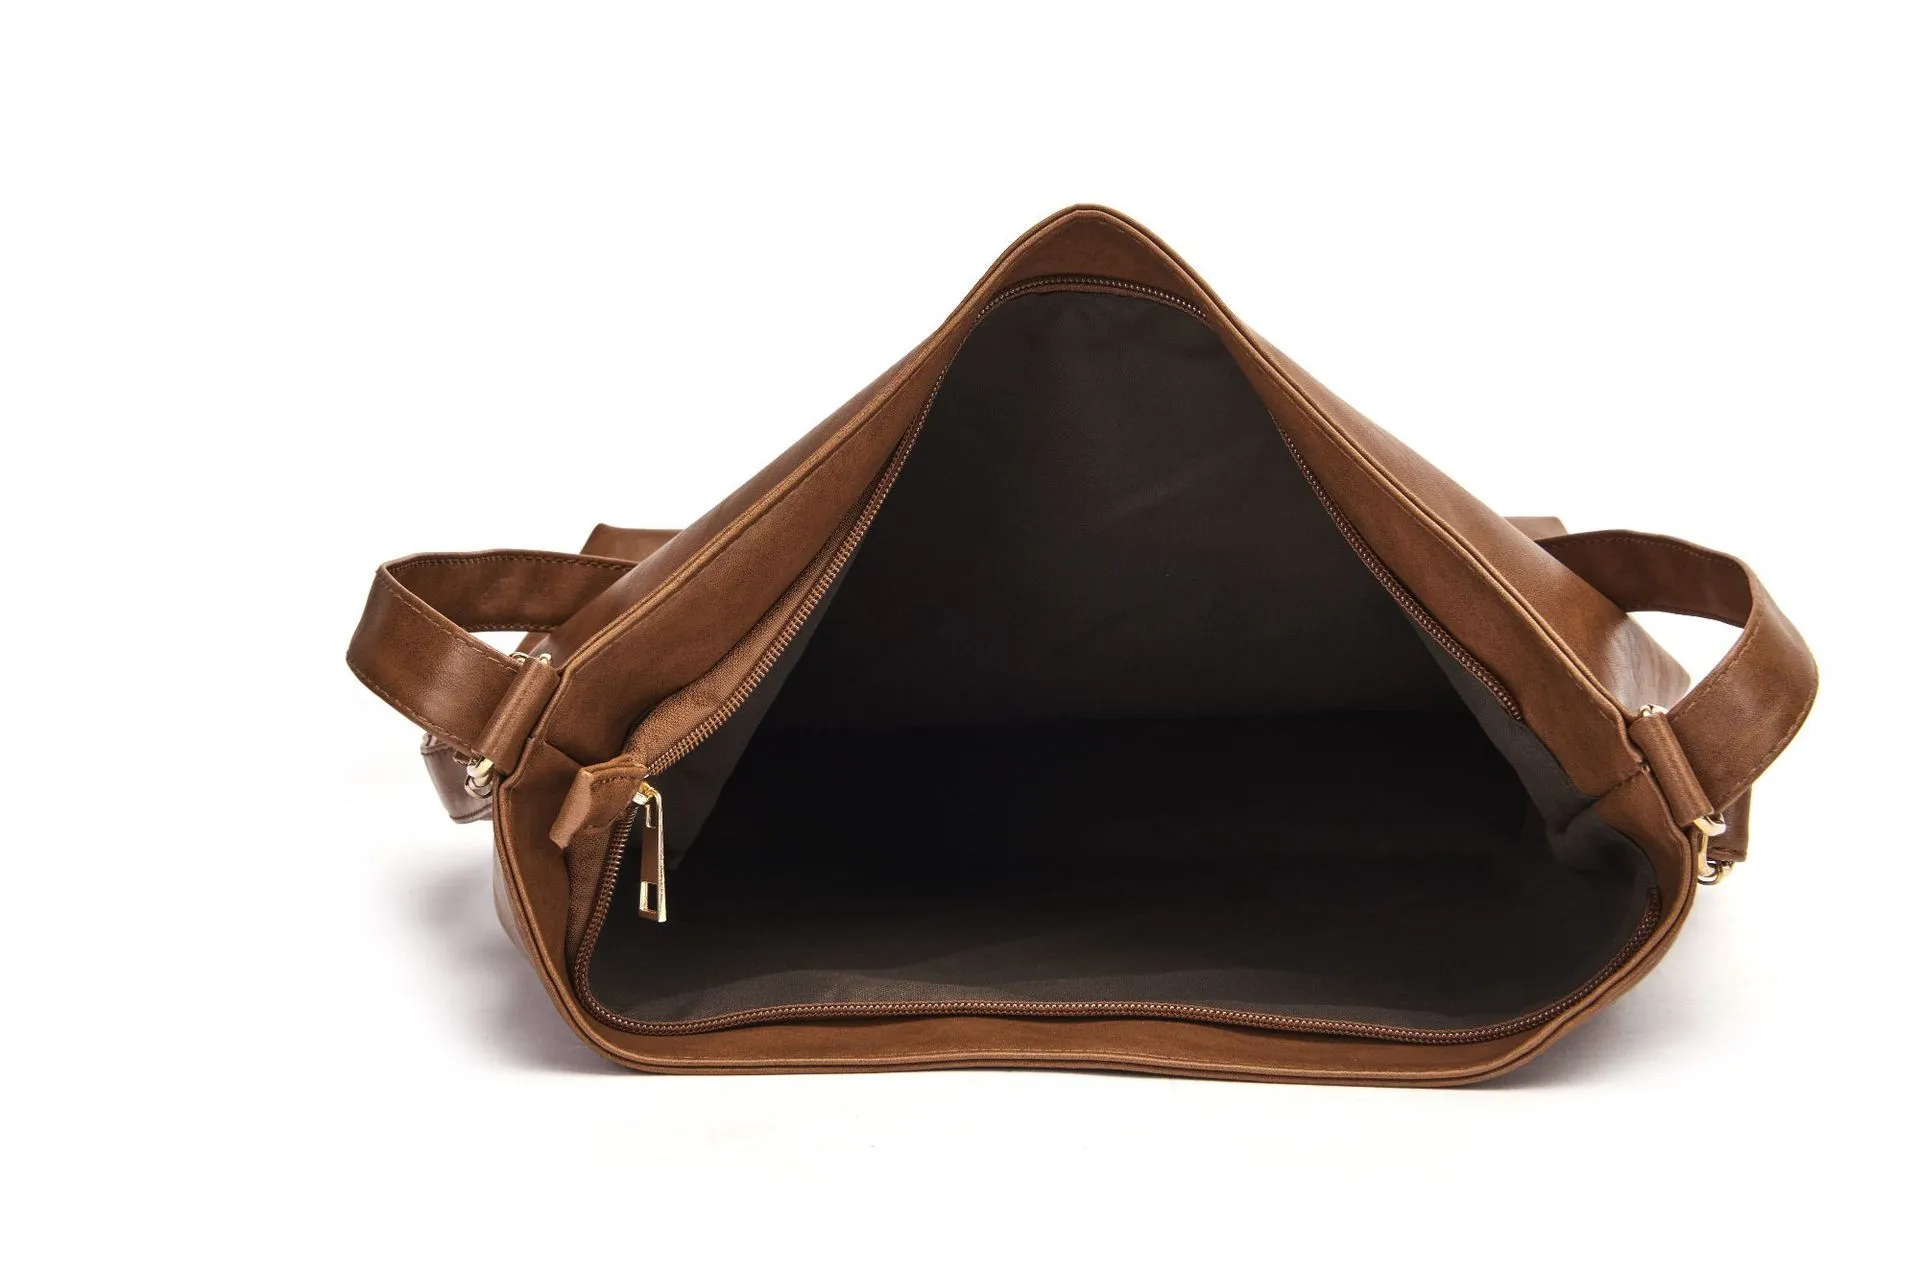 Convertible backpack purse ovals - IcaAcs